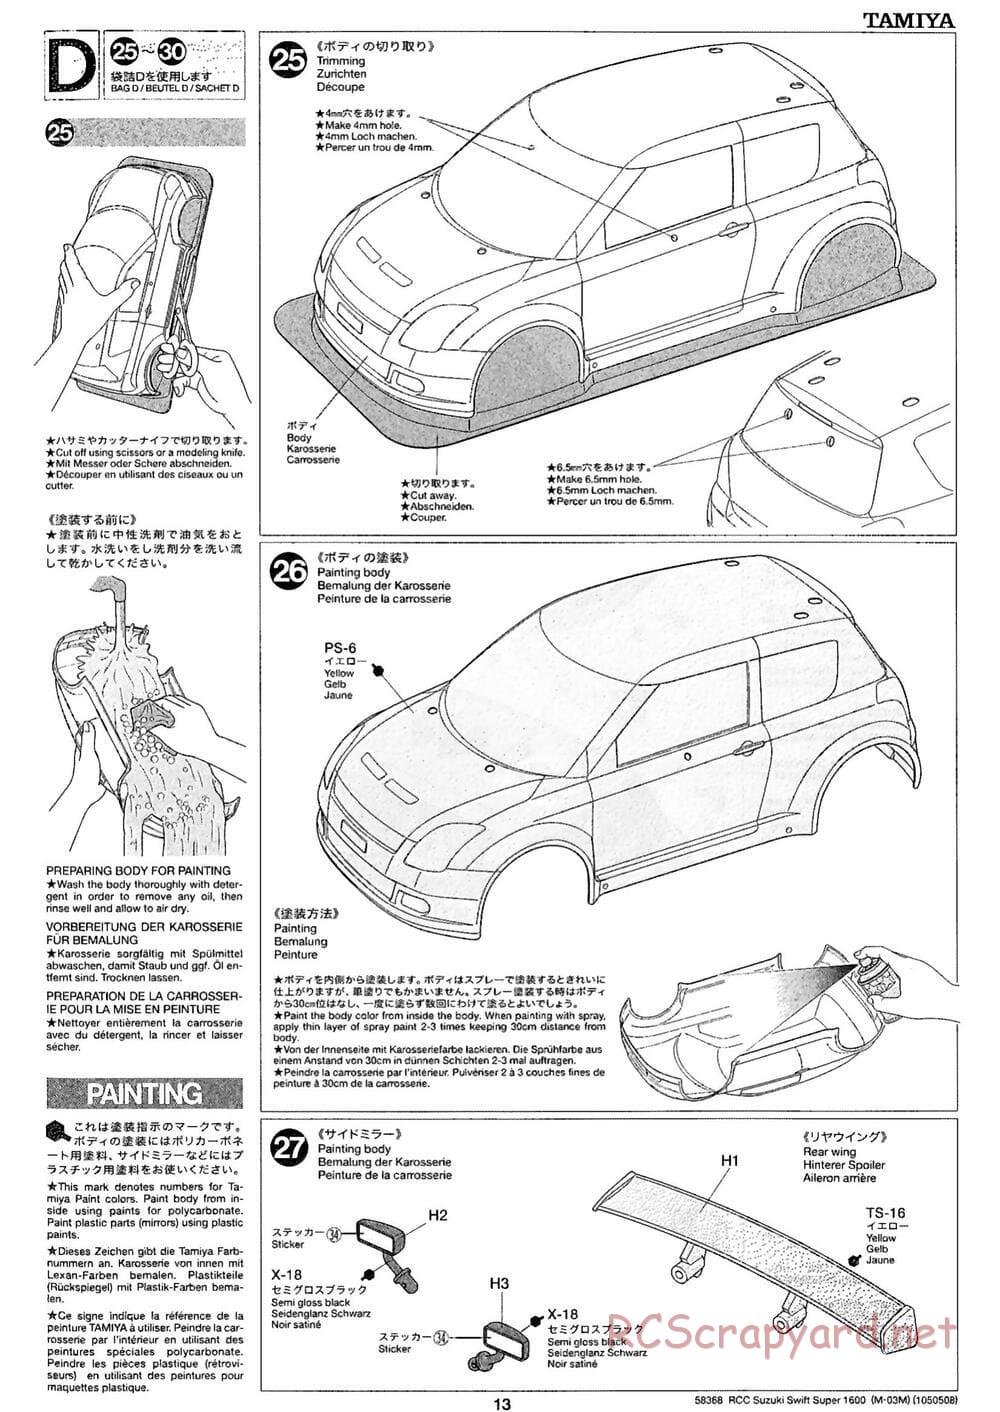 Tamiya - Suzuki Swift Super 1600 - M03M Chassis - Manual - Page 13